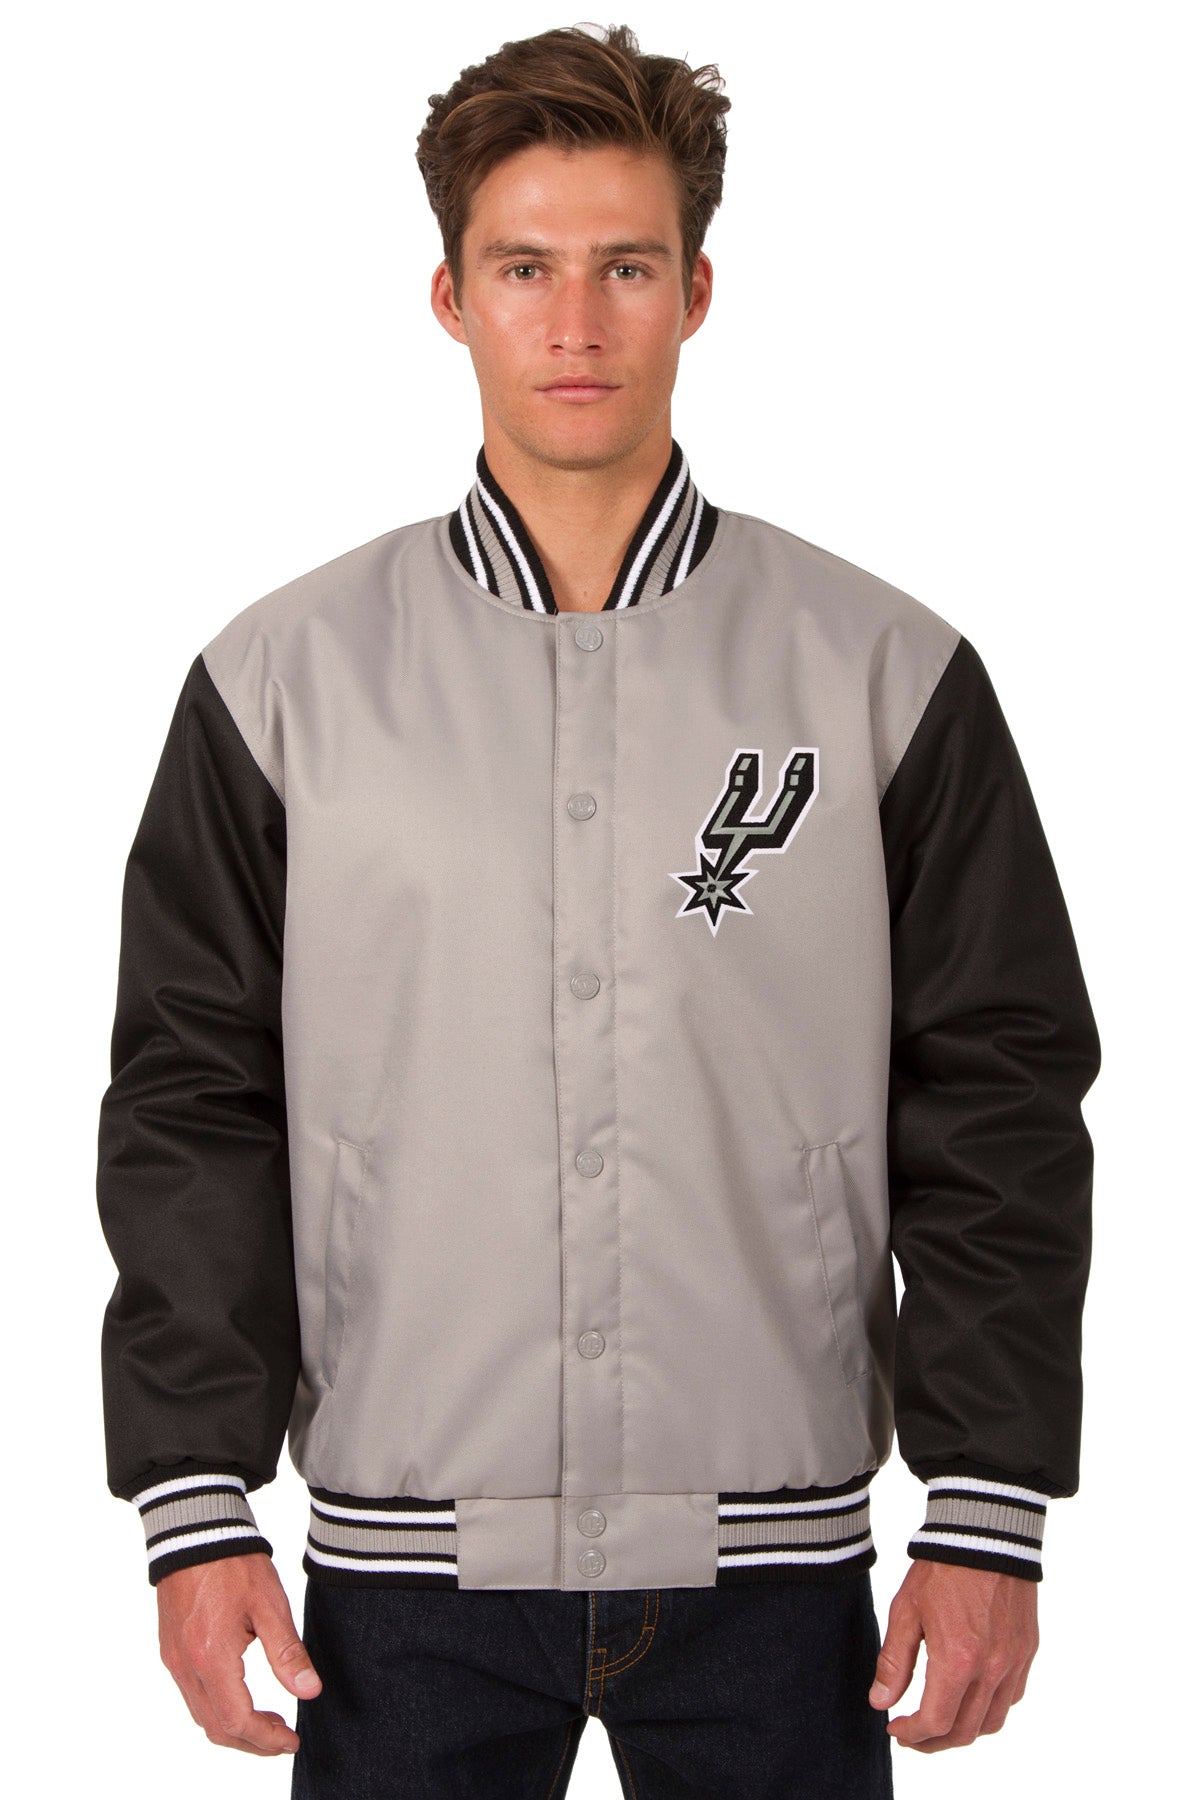 San Antonio SPURS Jacket Black/Gray/Silver Accents USG NBA Sports Apparel  Men XL